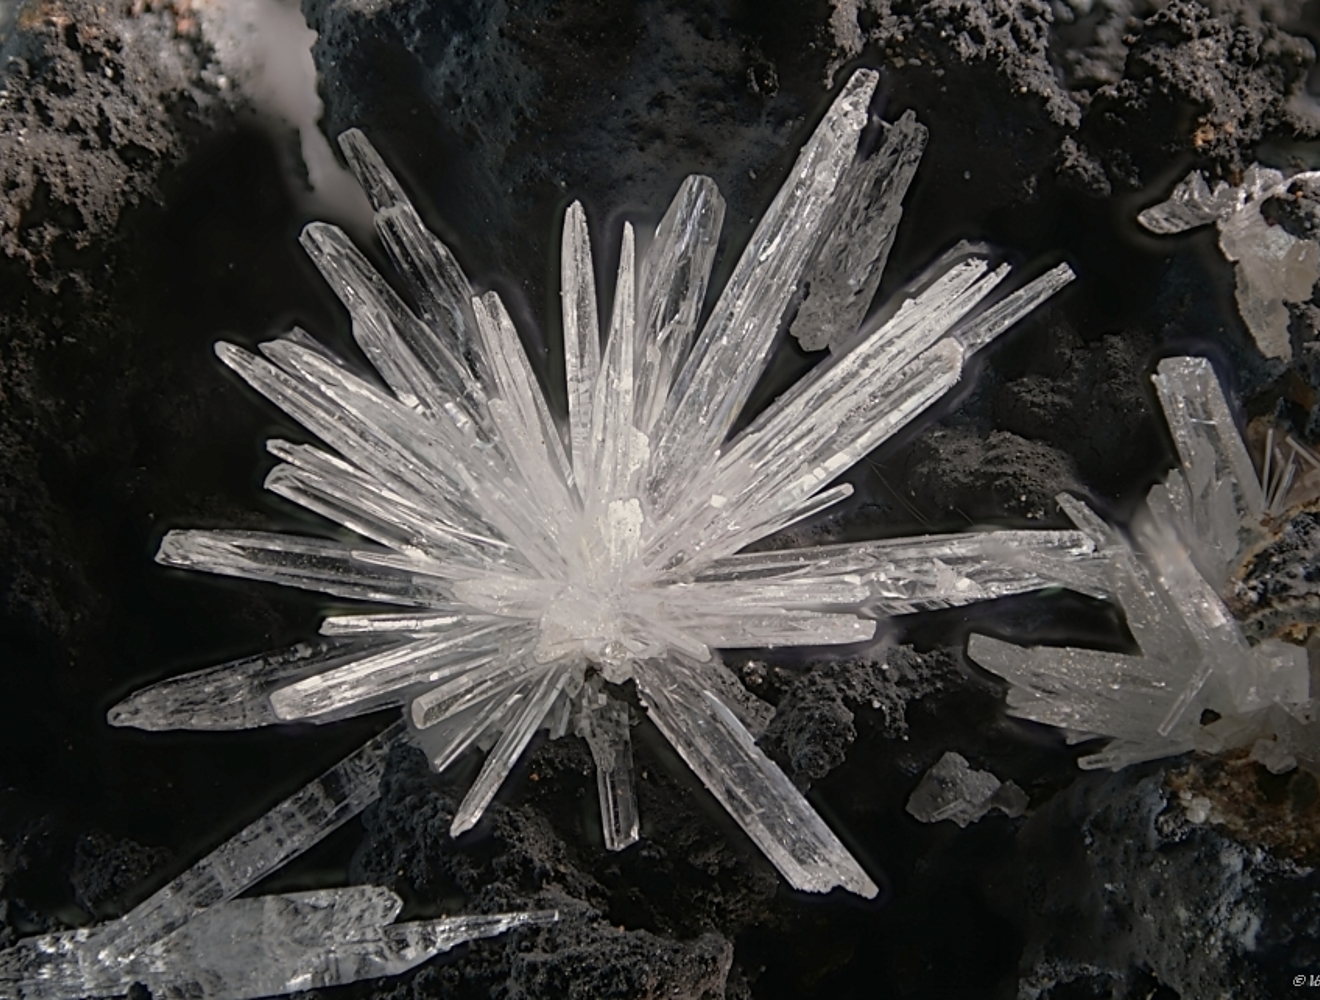 File:Caja de minerales y rocas 2012 001.JPG - Wikimedia Commons